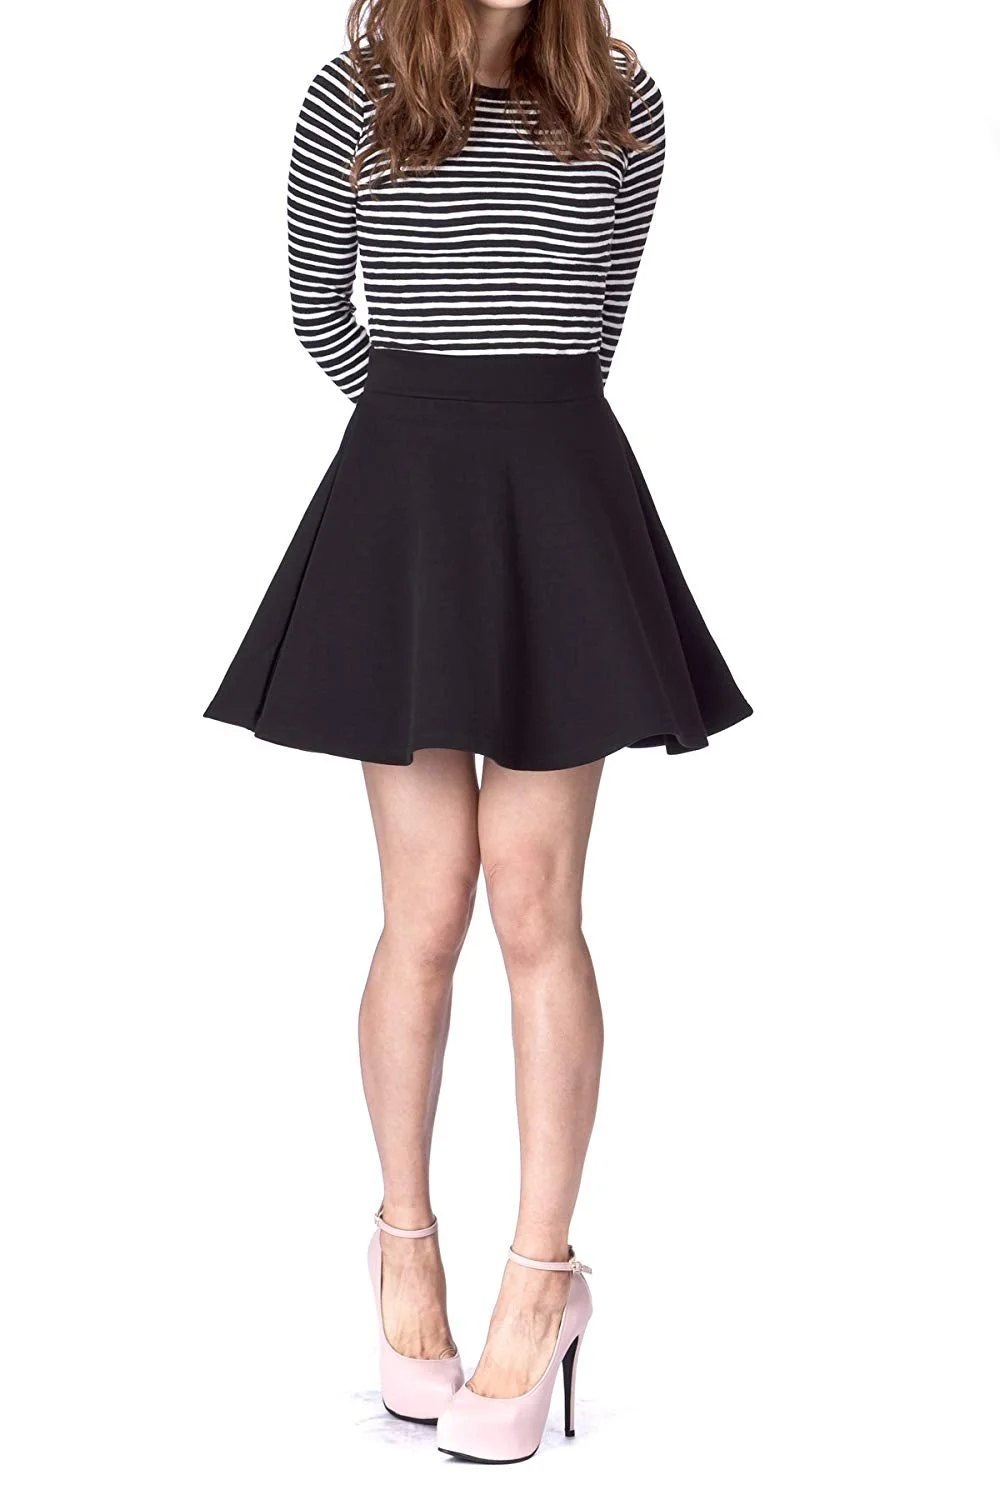 Basic Solid Stretchy Cotton High Waist A-line Flared Skater Mini Skirt